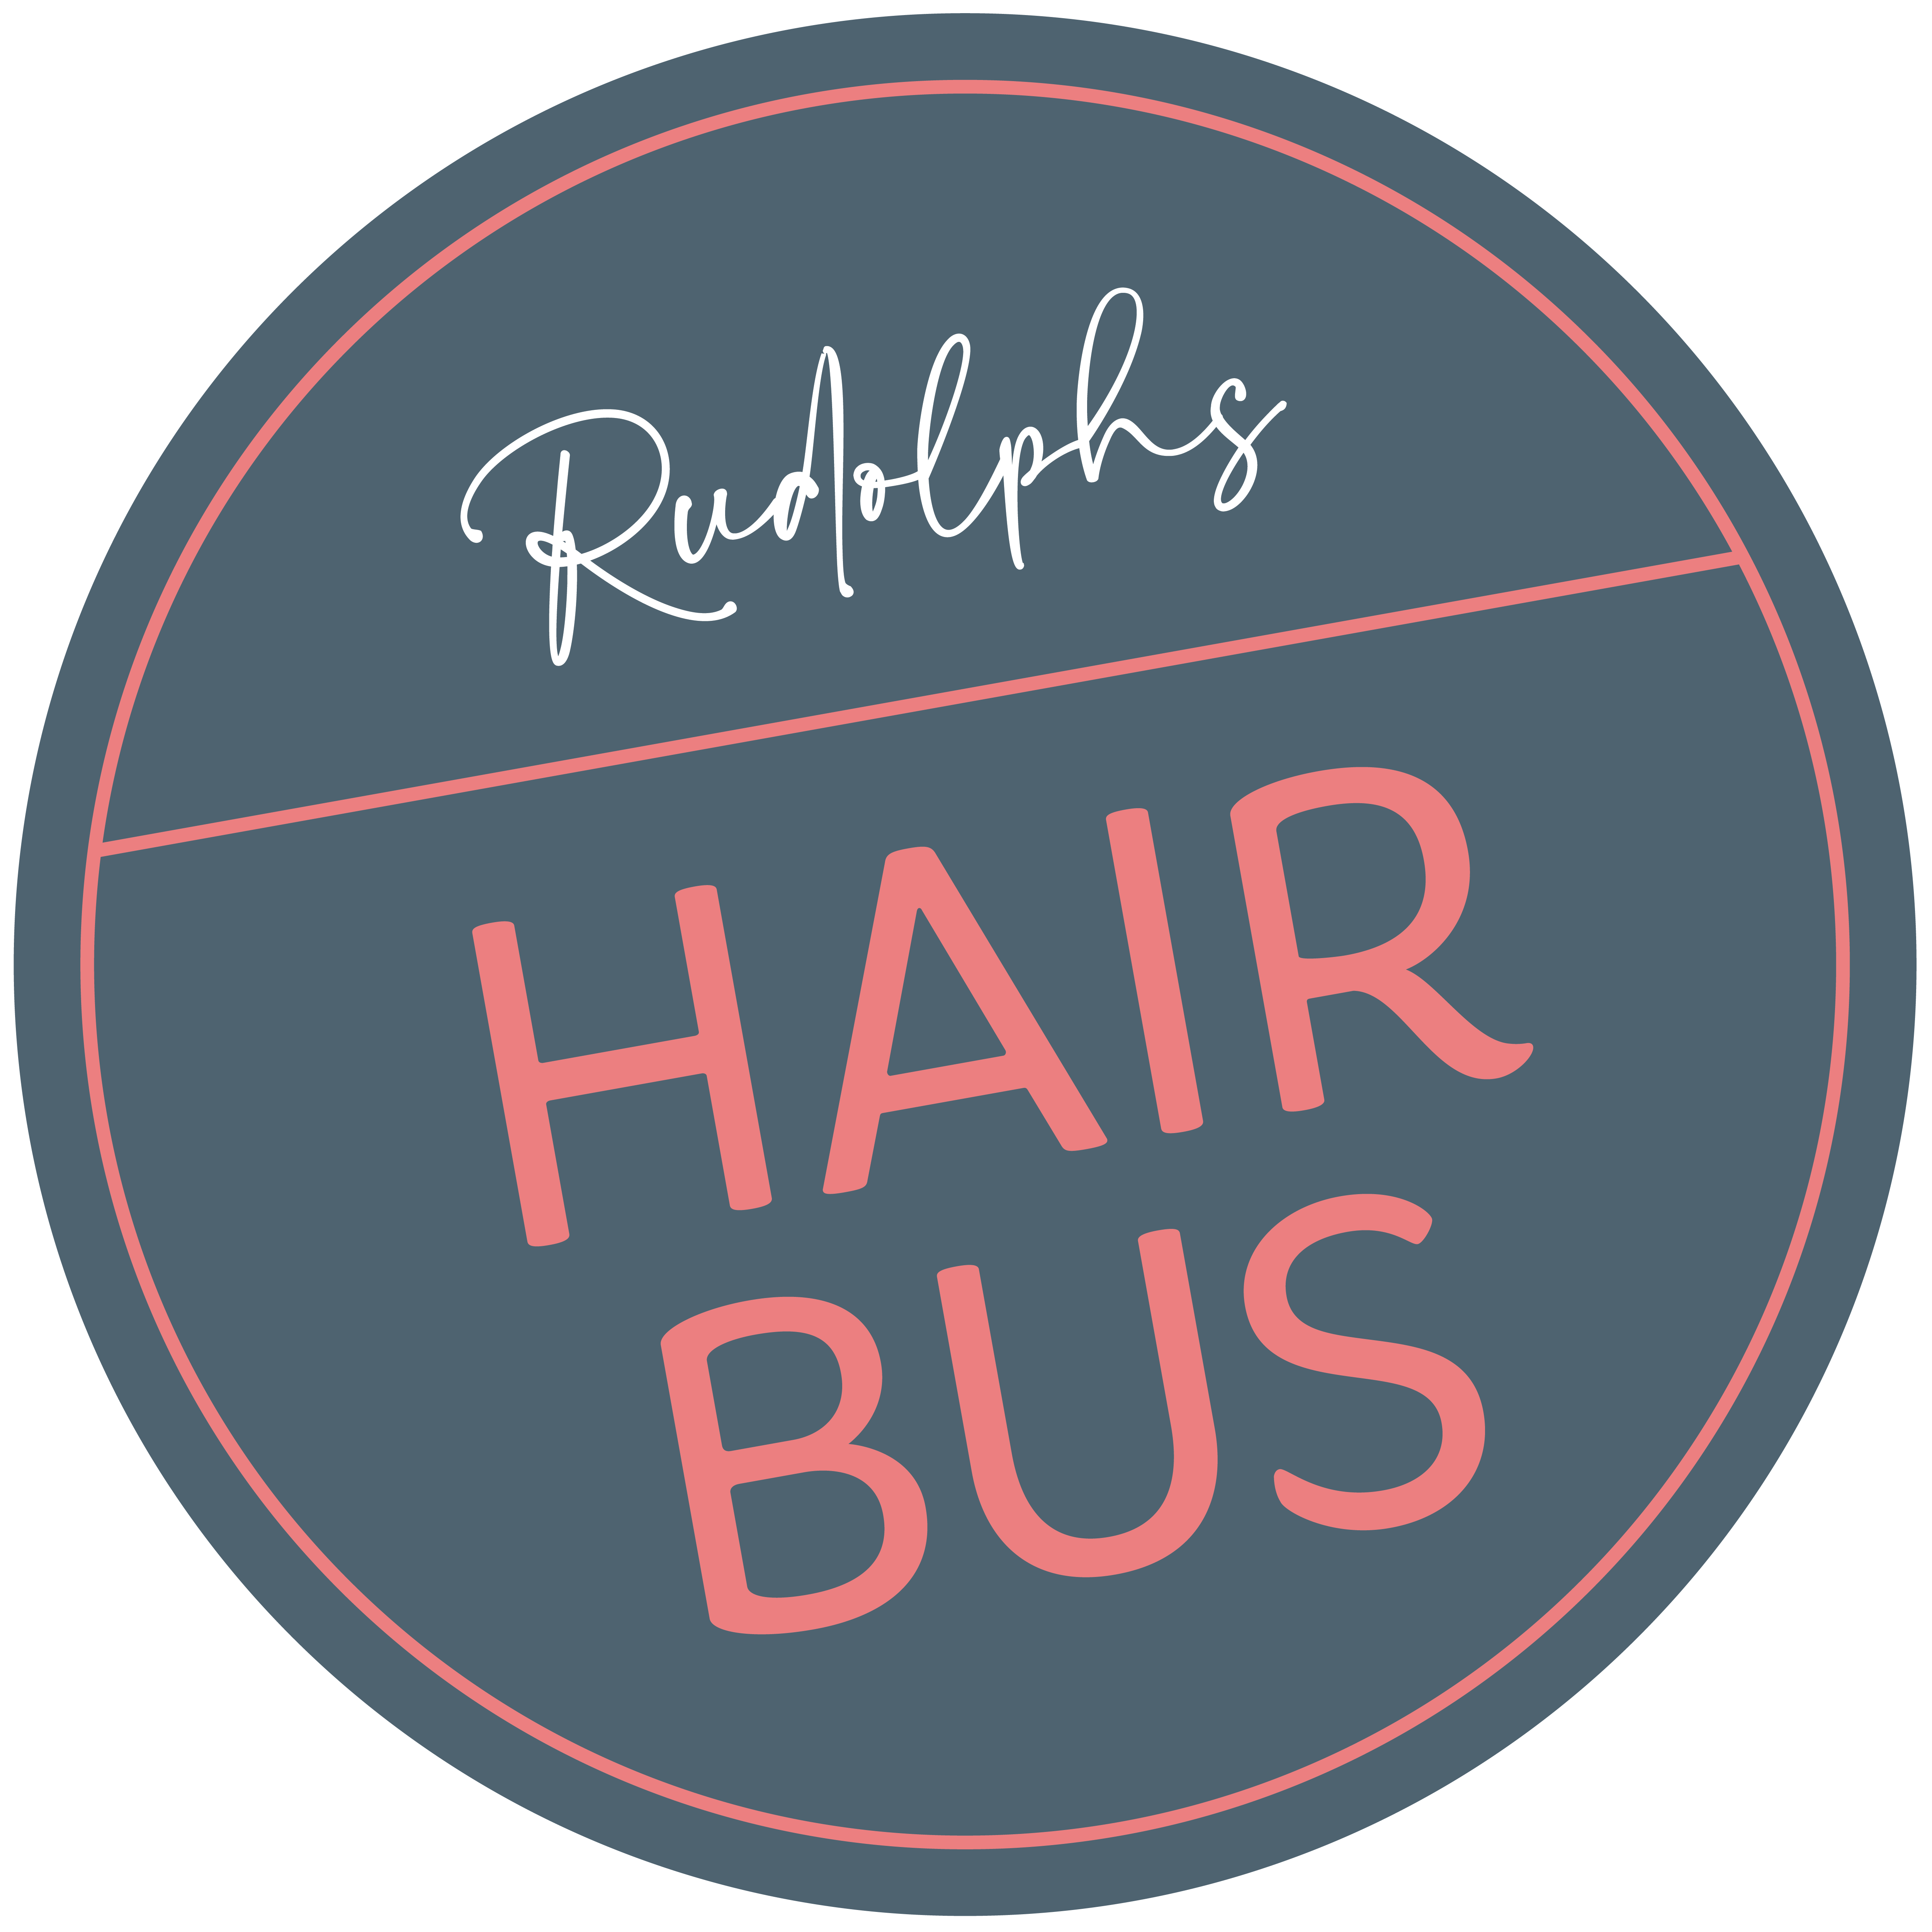 Rudolphs Hairbus